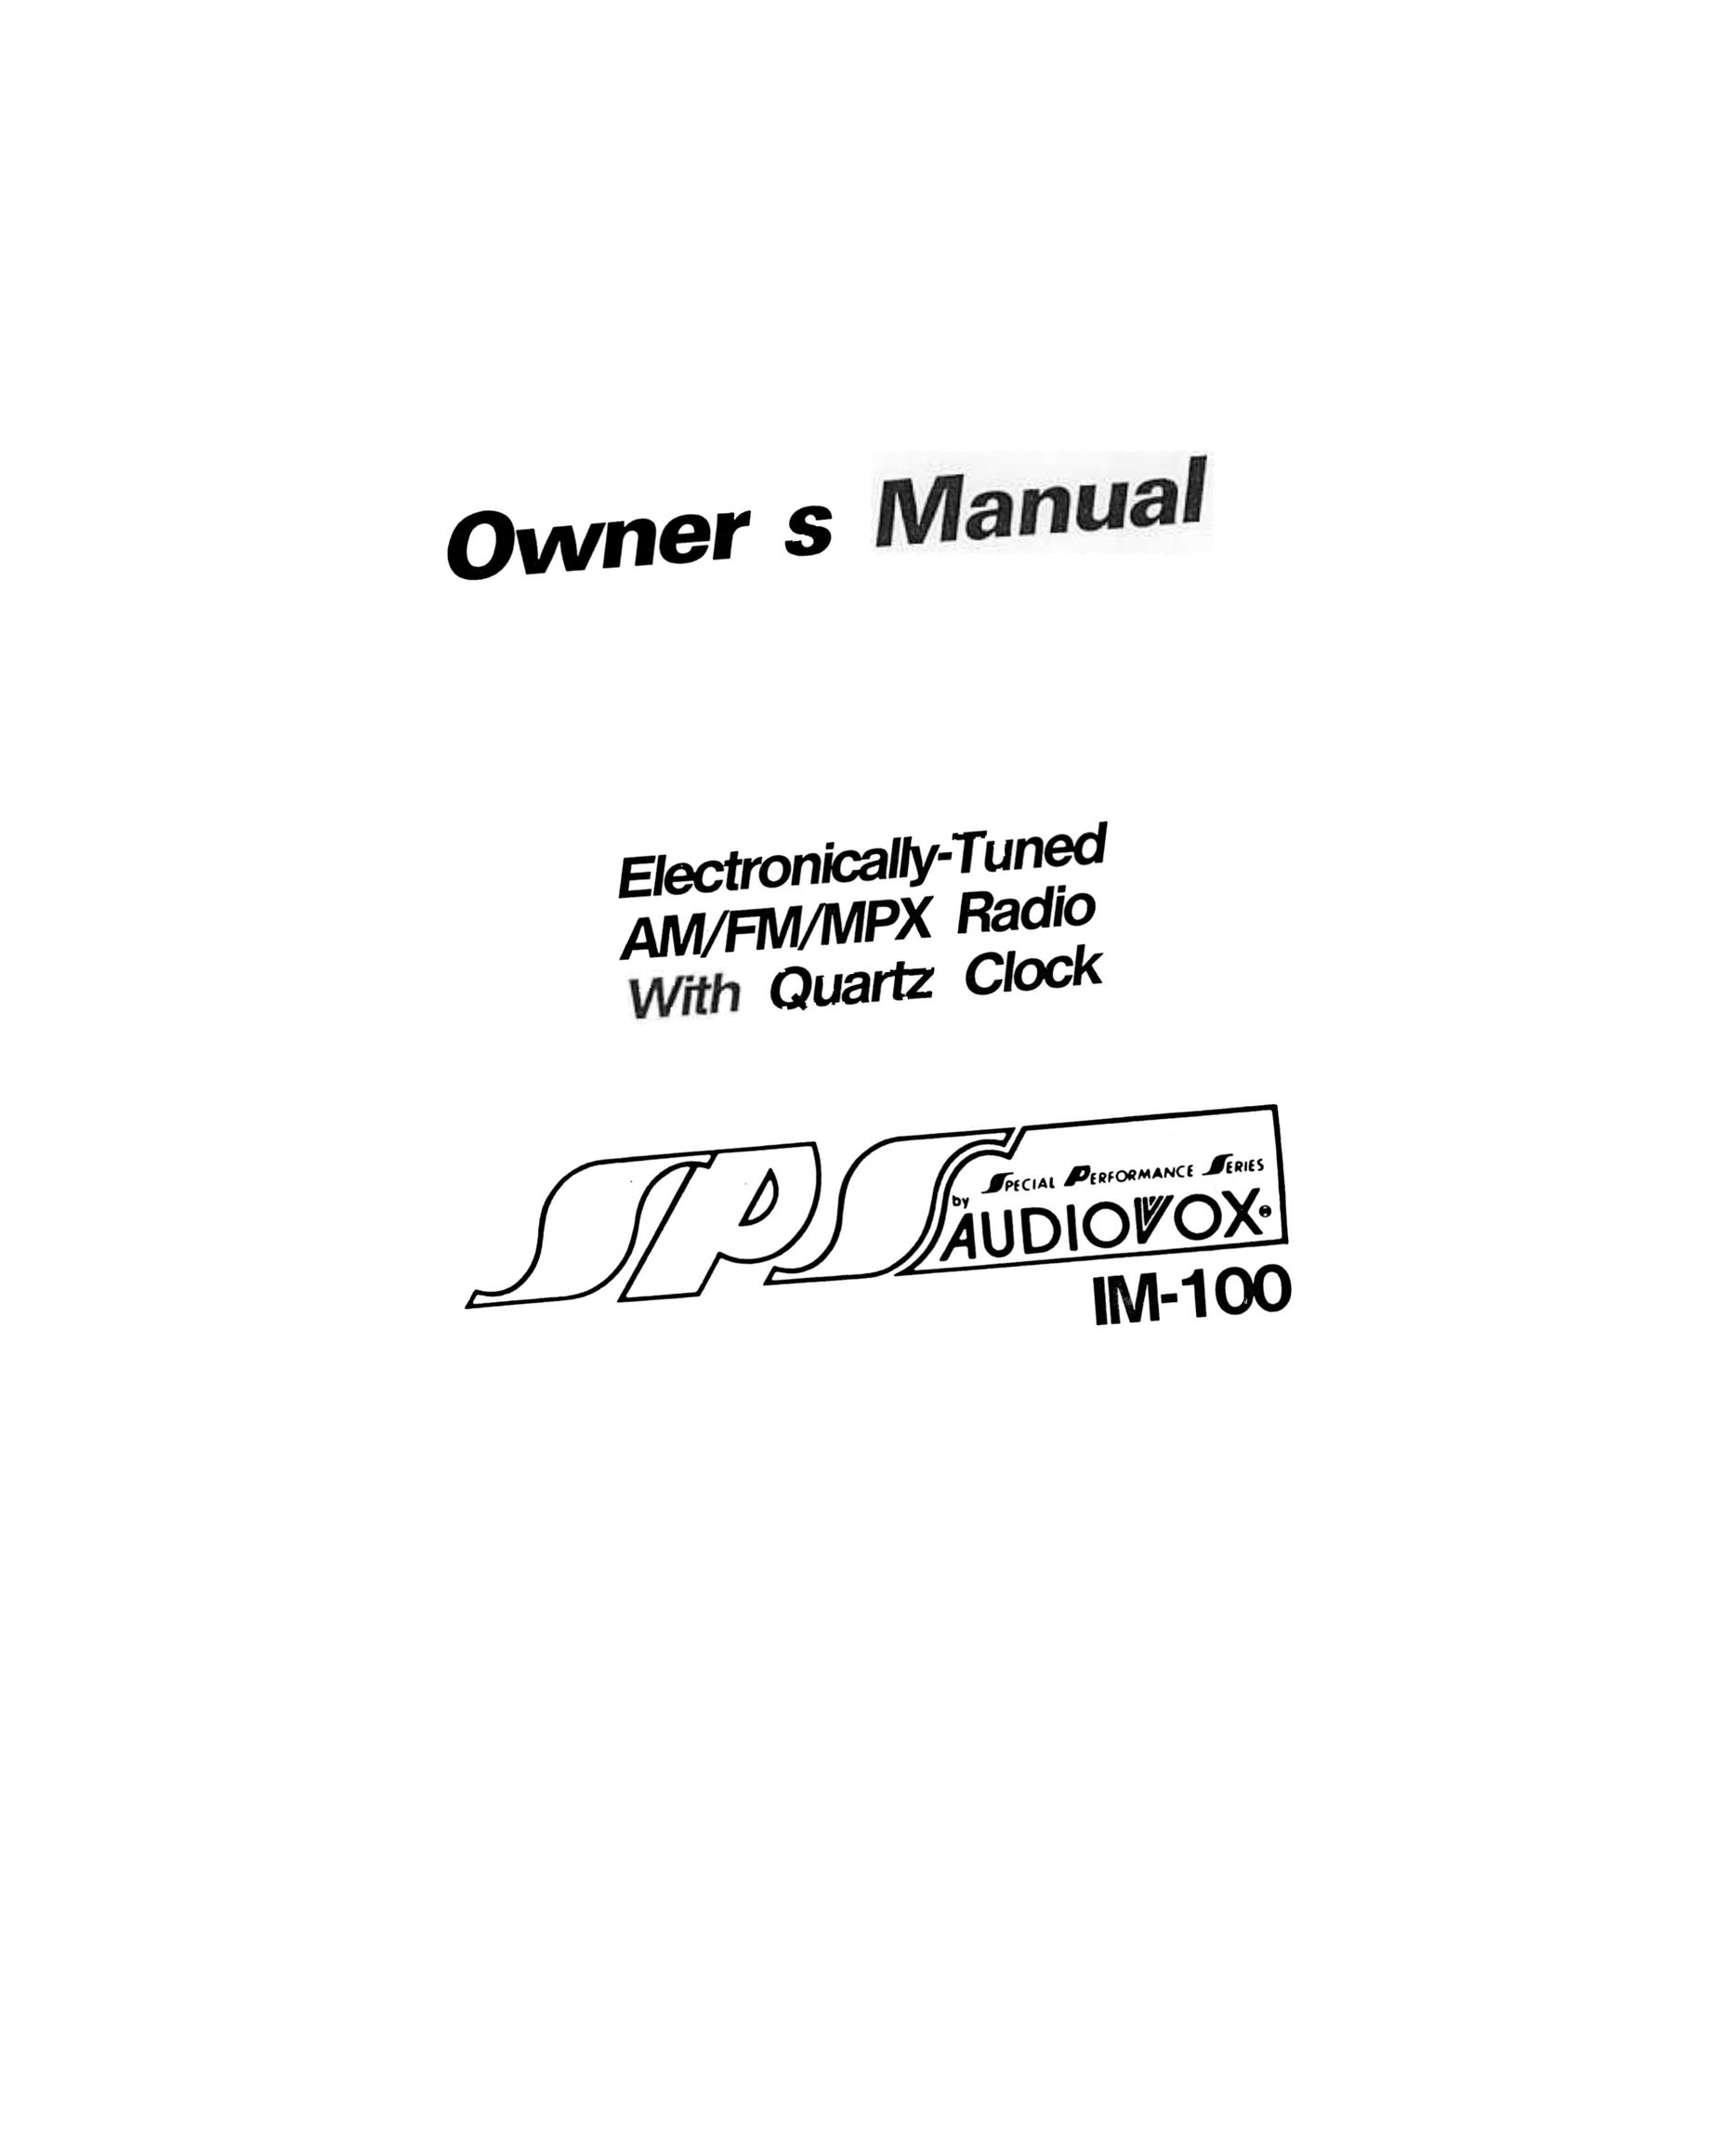 Audiovox IM-100 Radio User Manual